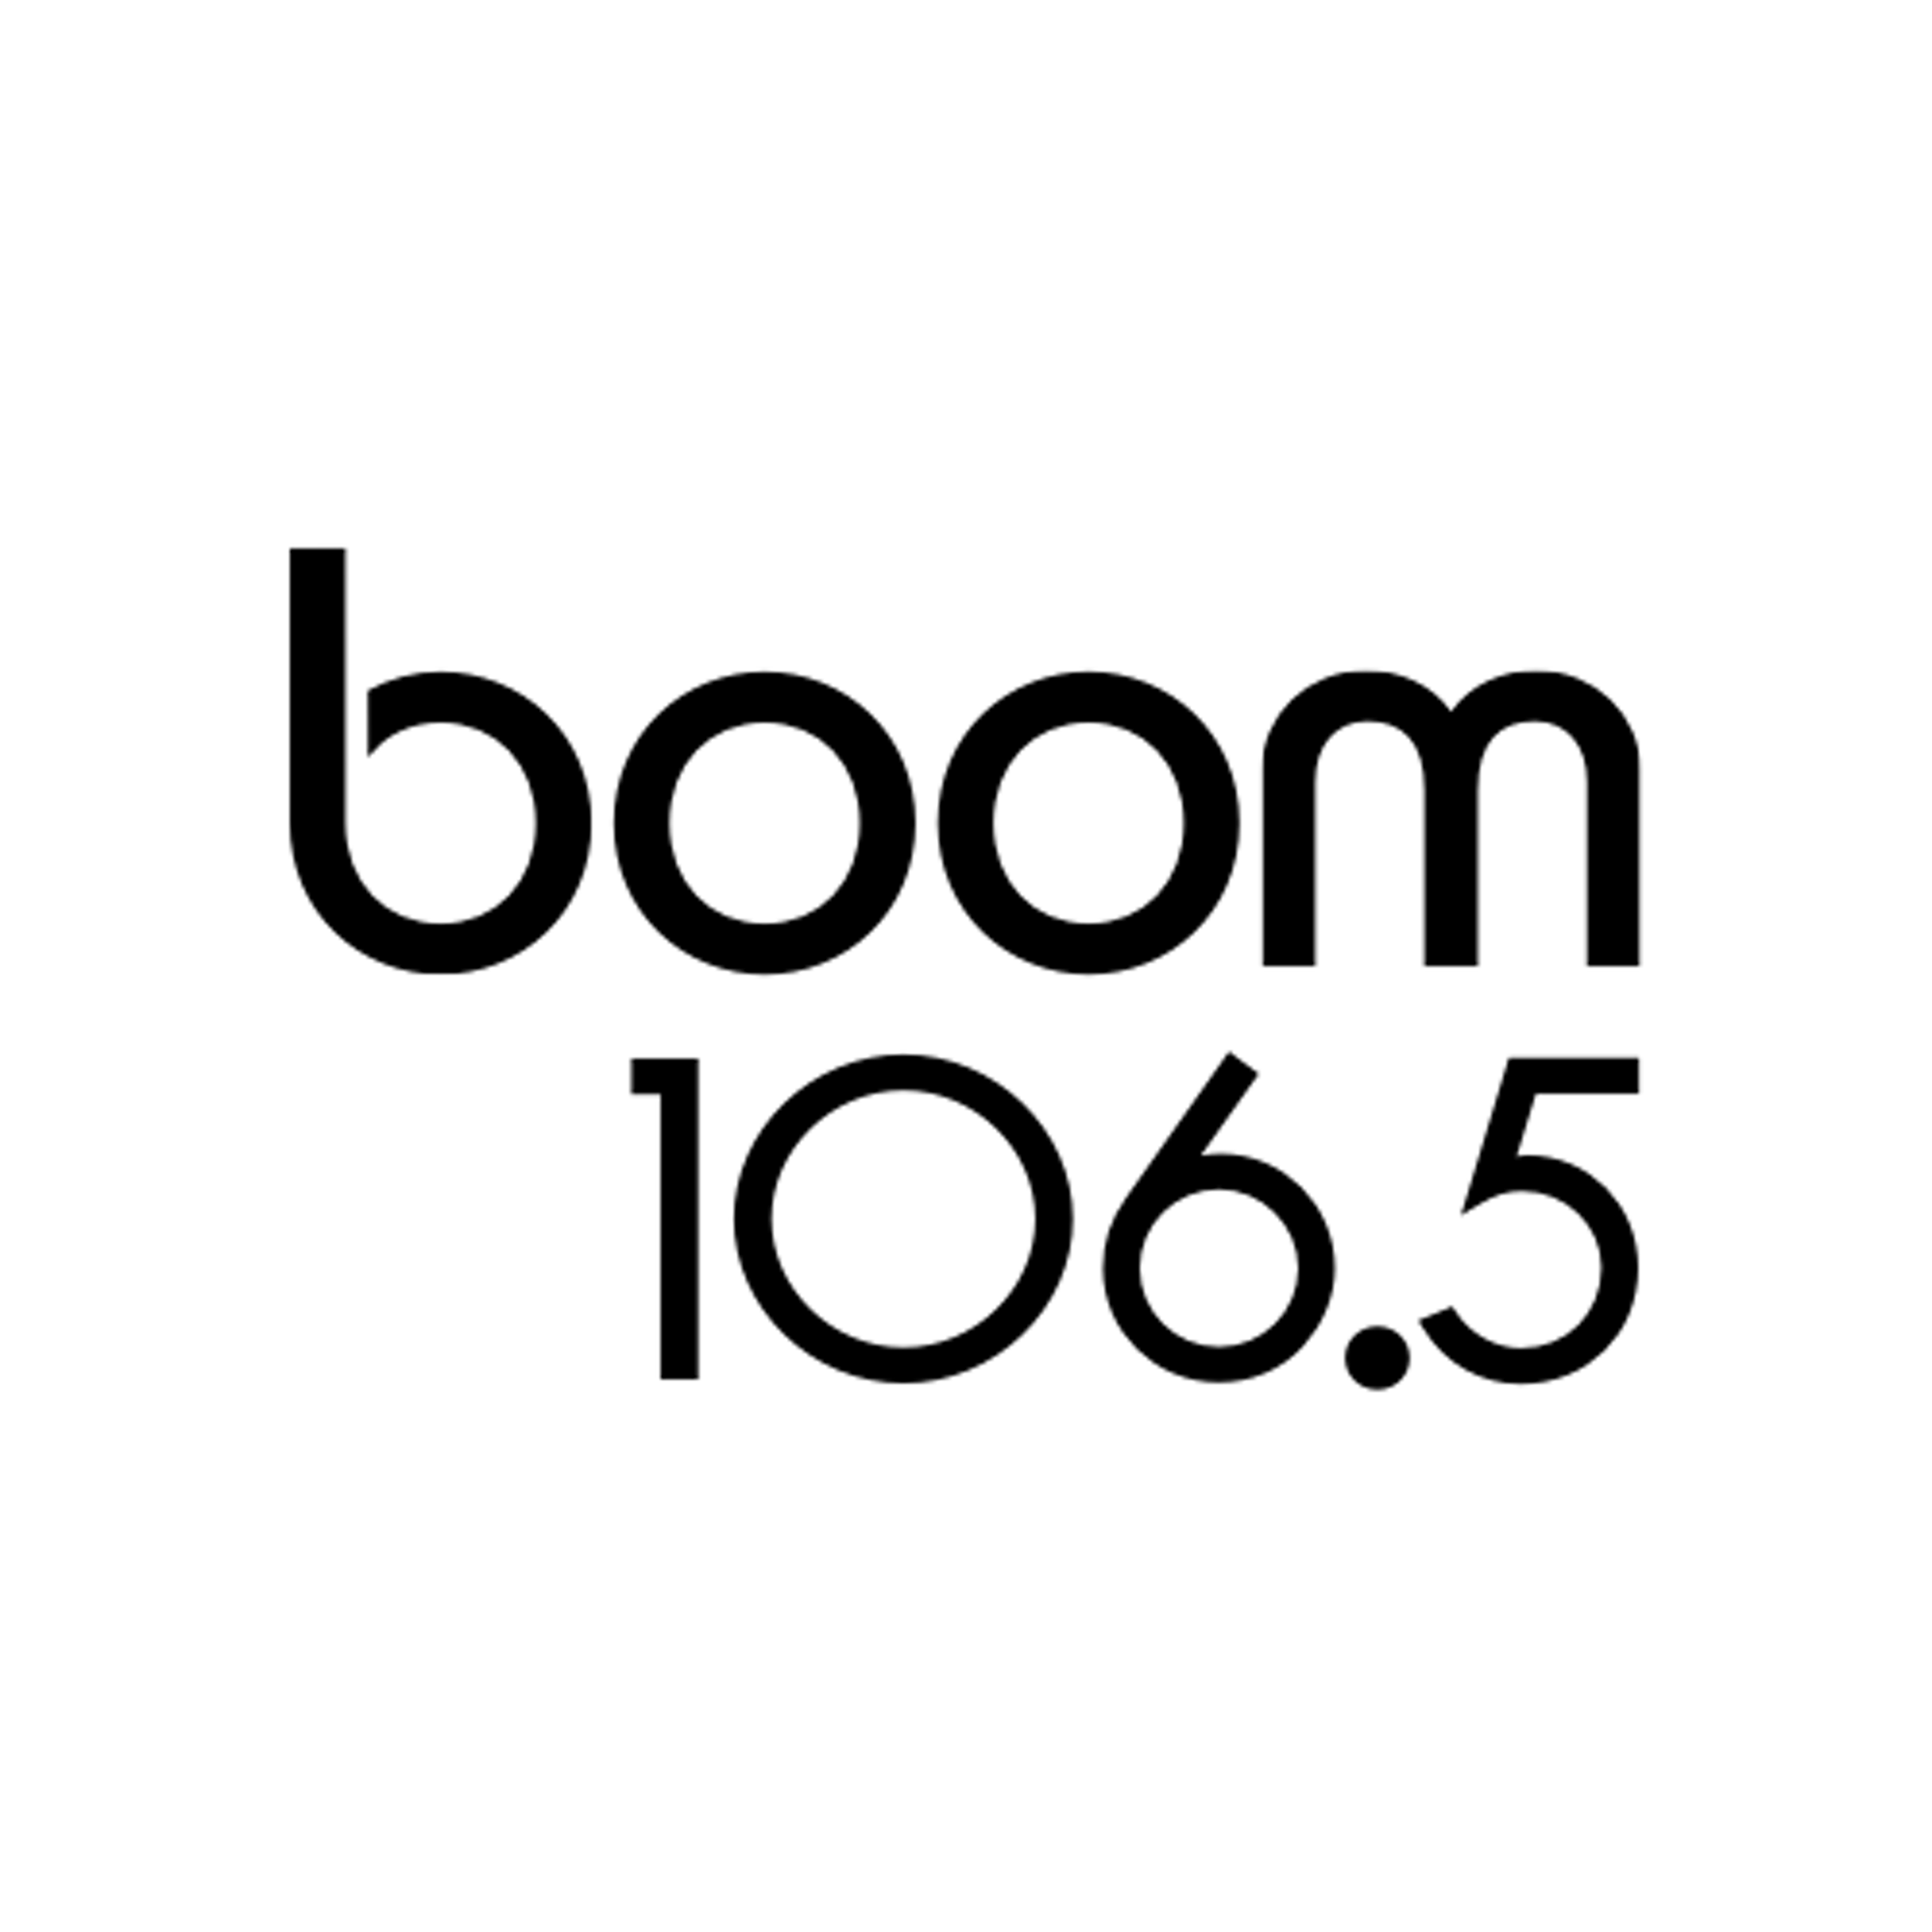 Boom 106.5 logo